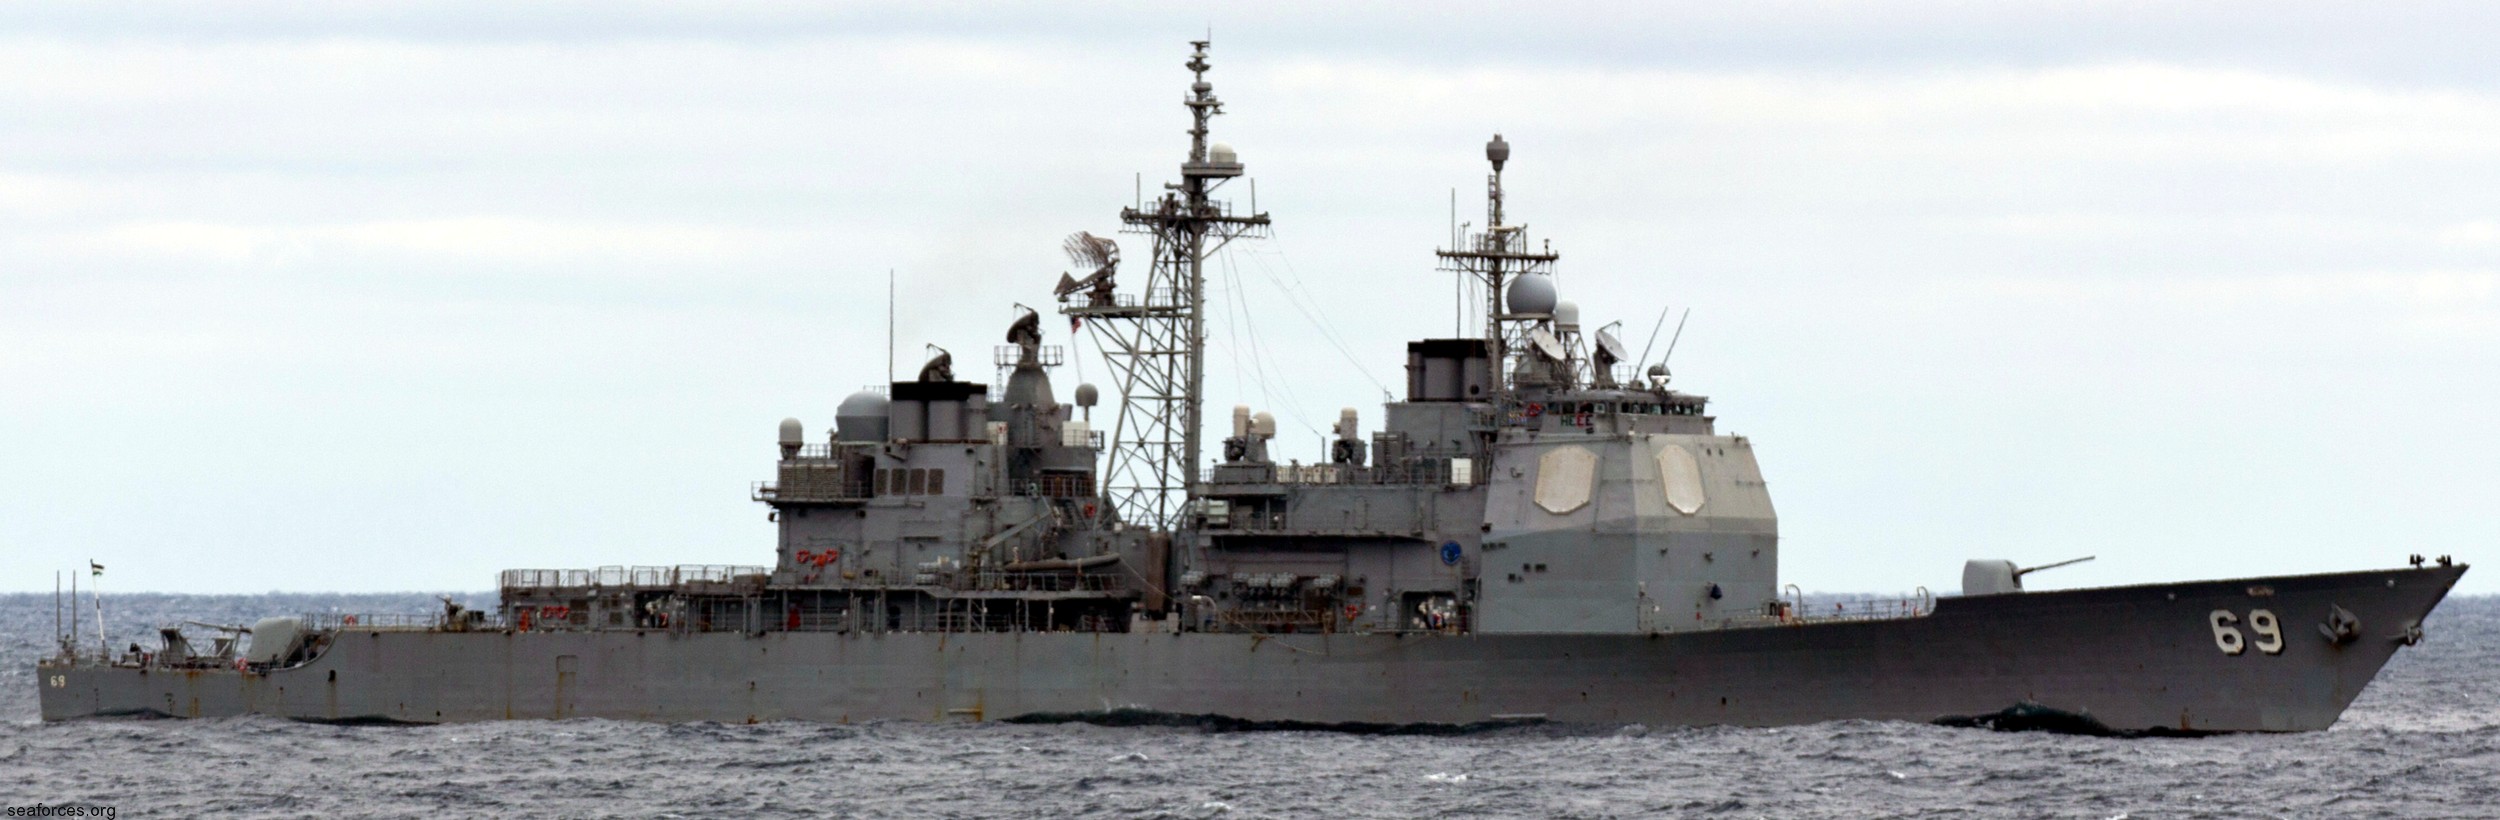 cg-69 uss vicksburg ticonderoga class guided missile cruiser us navy 14